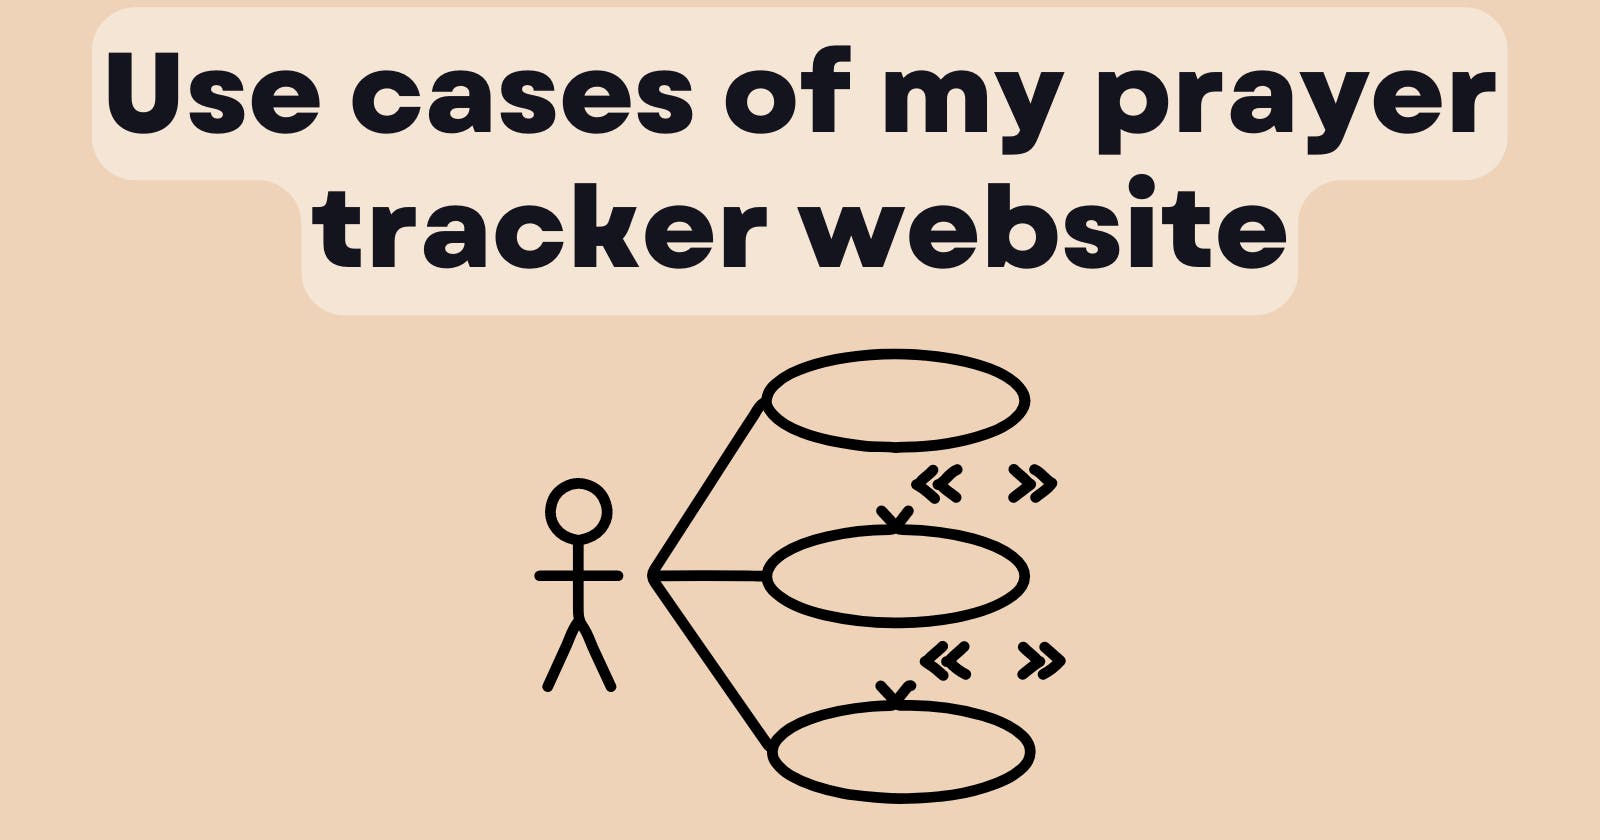 Use cases of my prayer tracker website